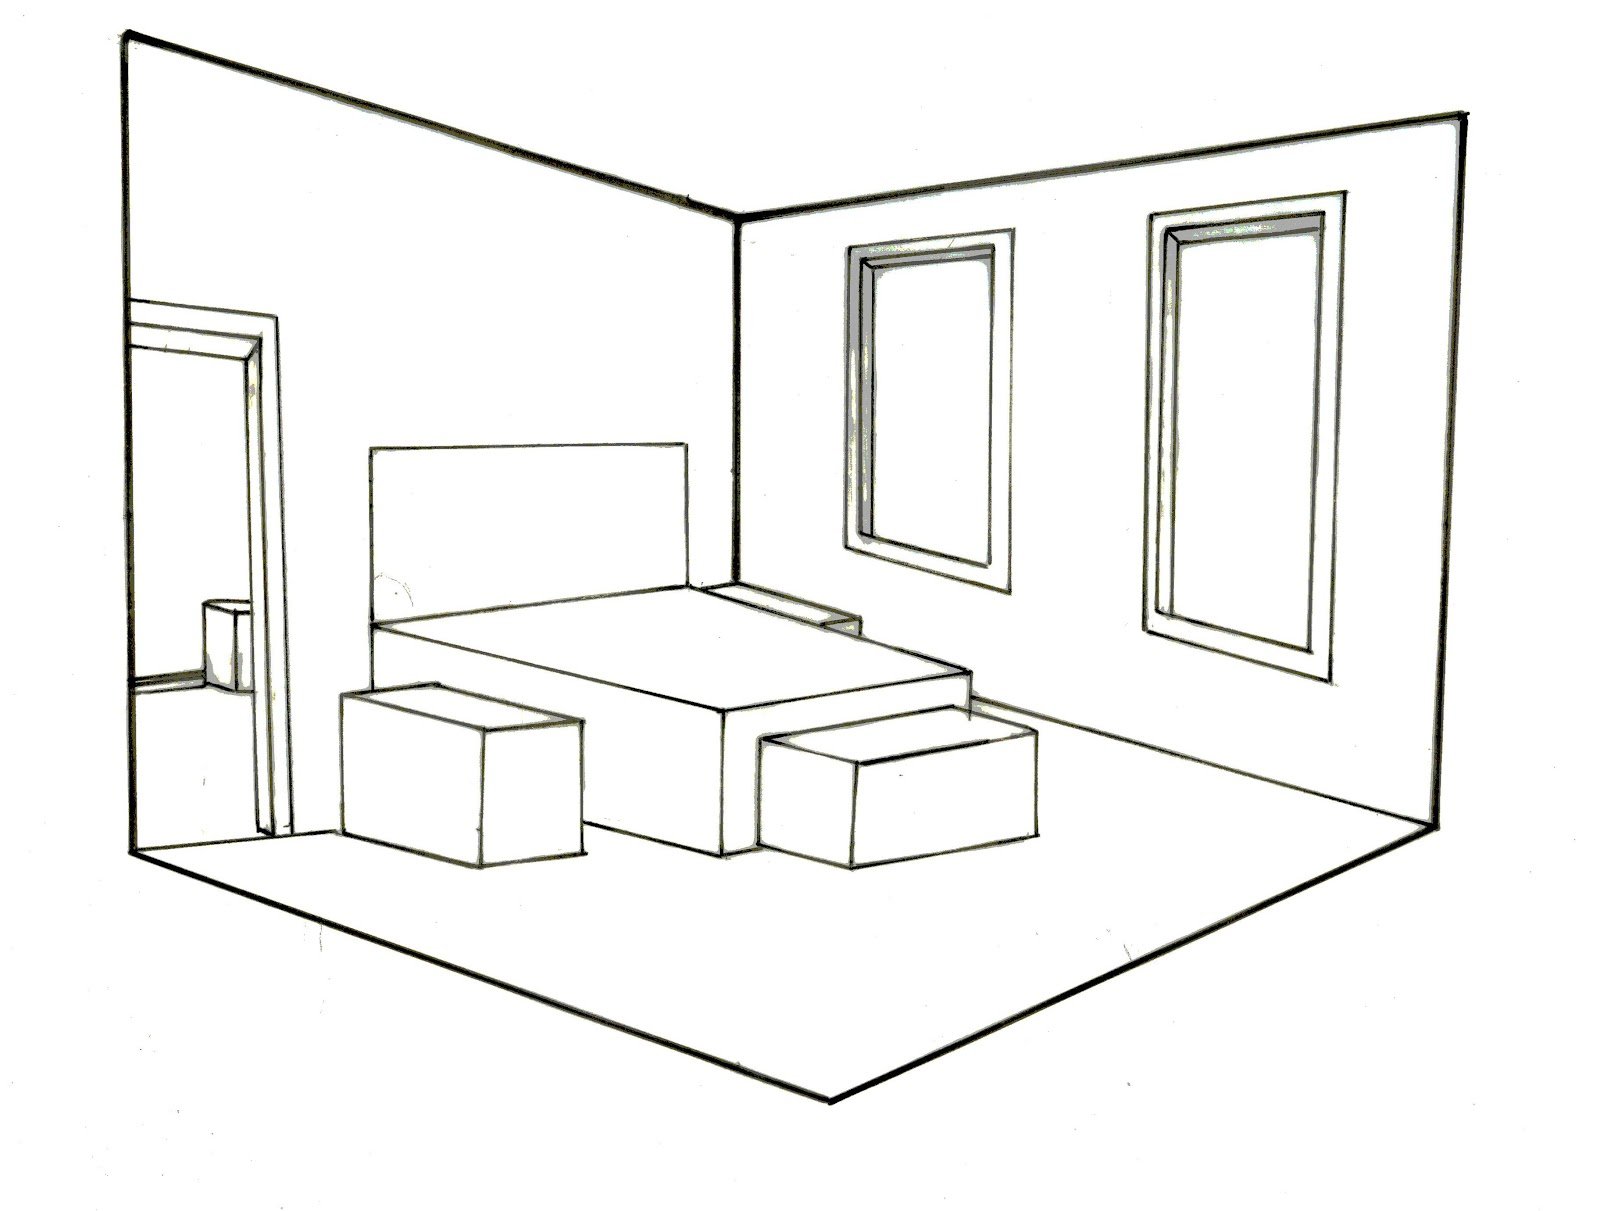 Ремонт комнаты поэтапно. Интерьер комнаты чертеж. Рисование интерьера комнаты. Угловая перспектива комнаты. Чертеж комнаты в перспективе.